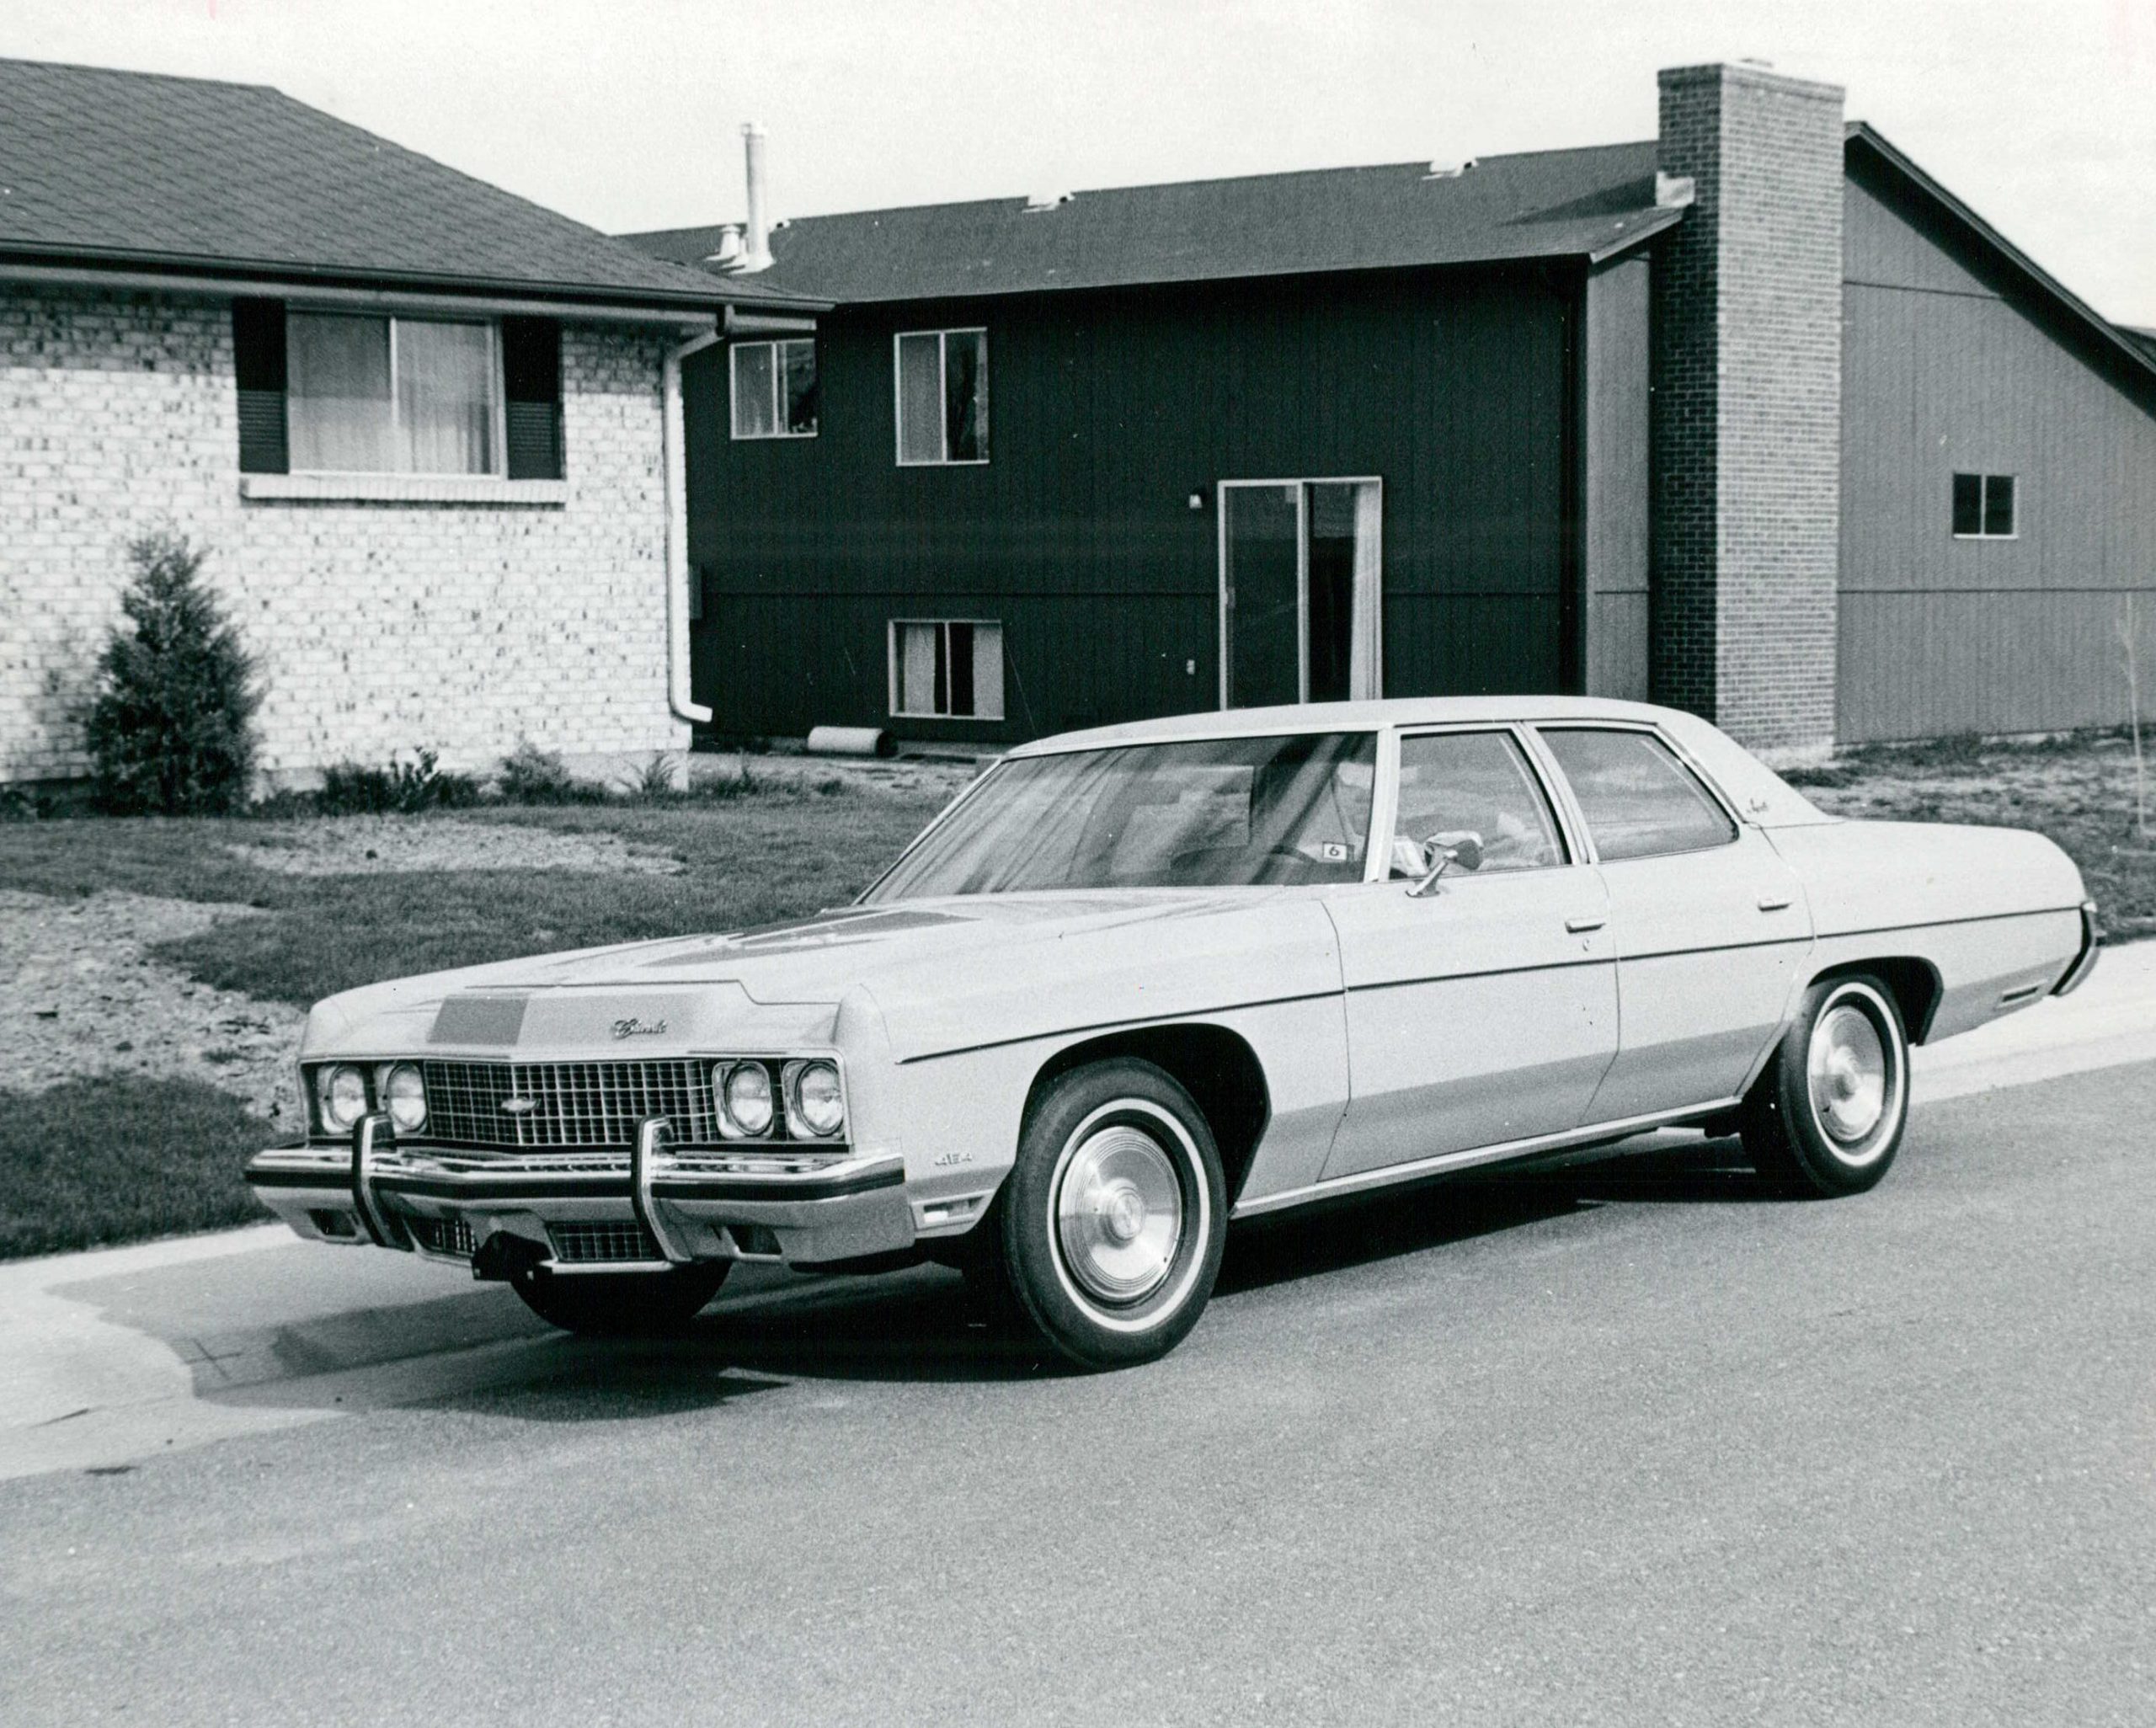 1973 Chevrolet Impala parked outside